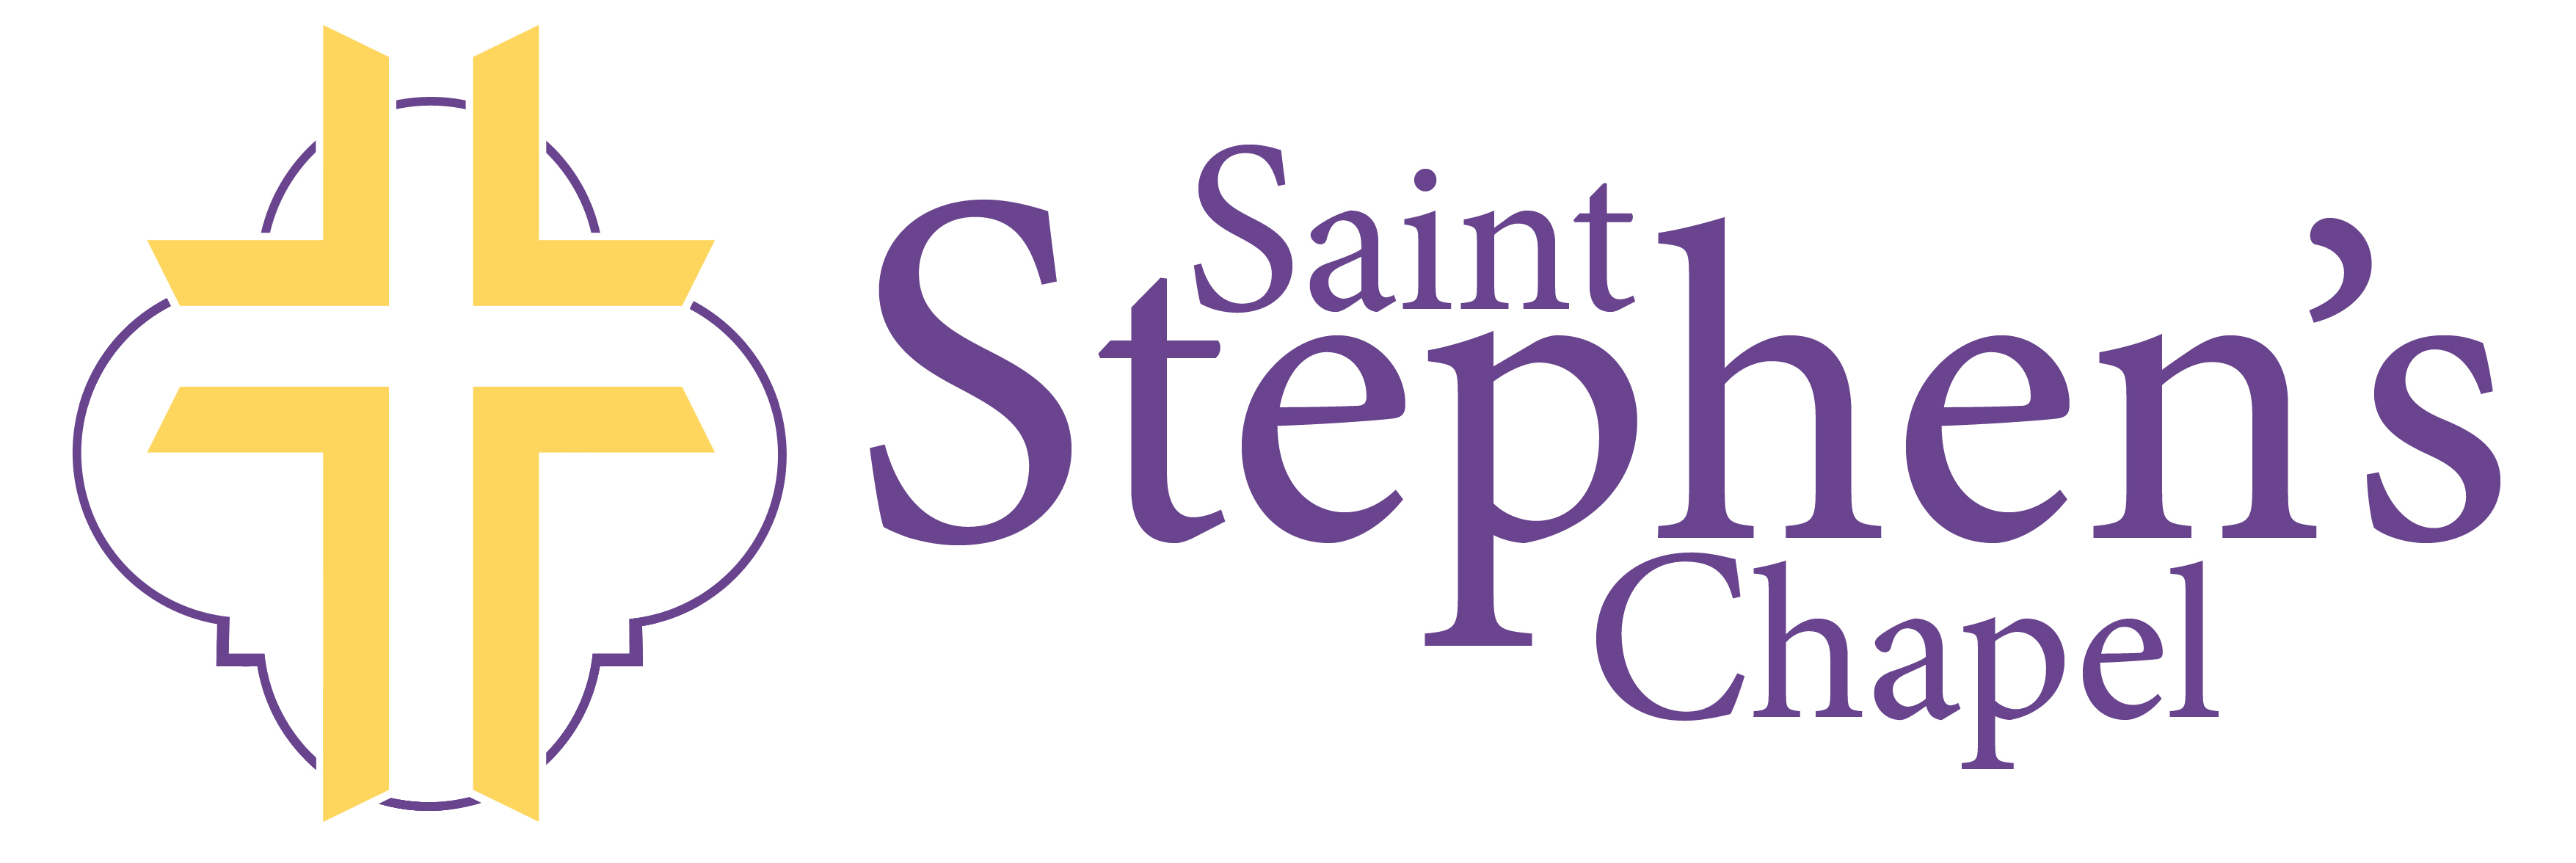 The Saint Stephen‘s Chapel Podcast